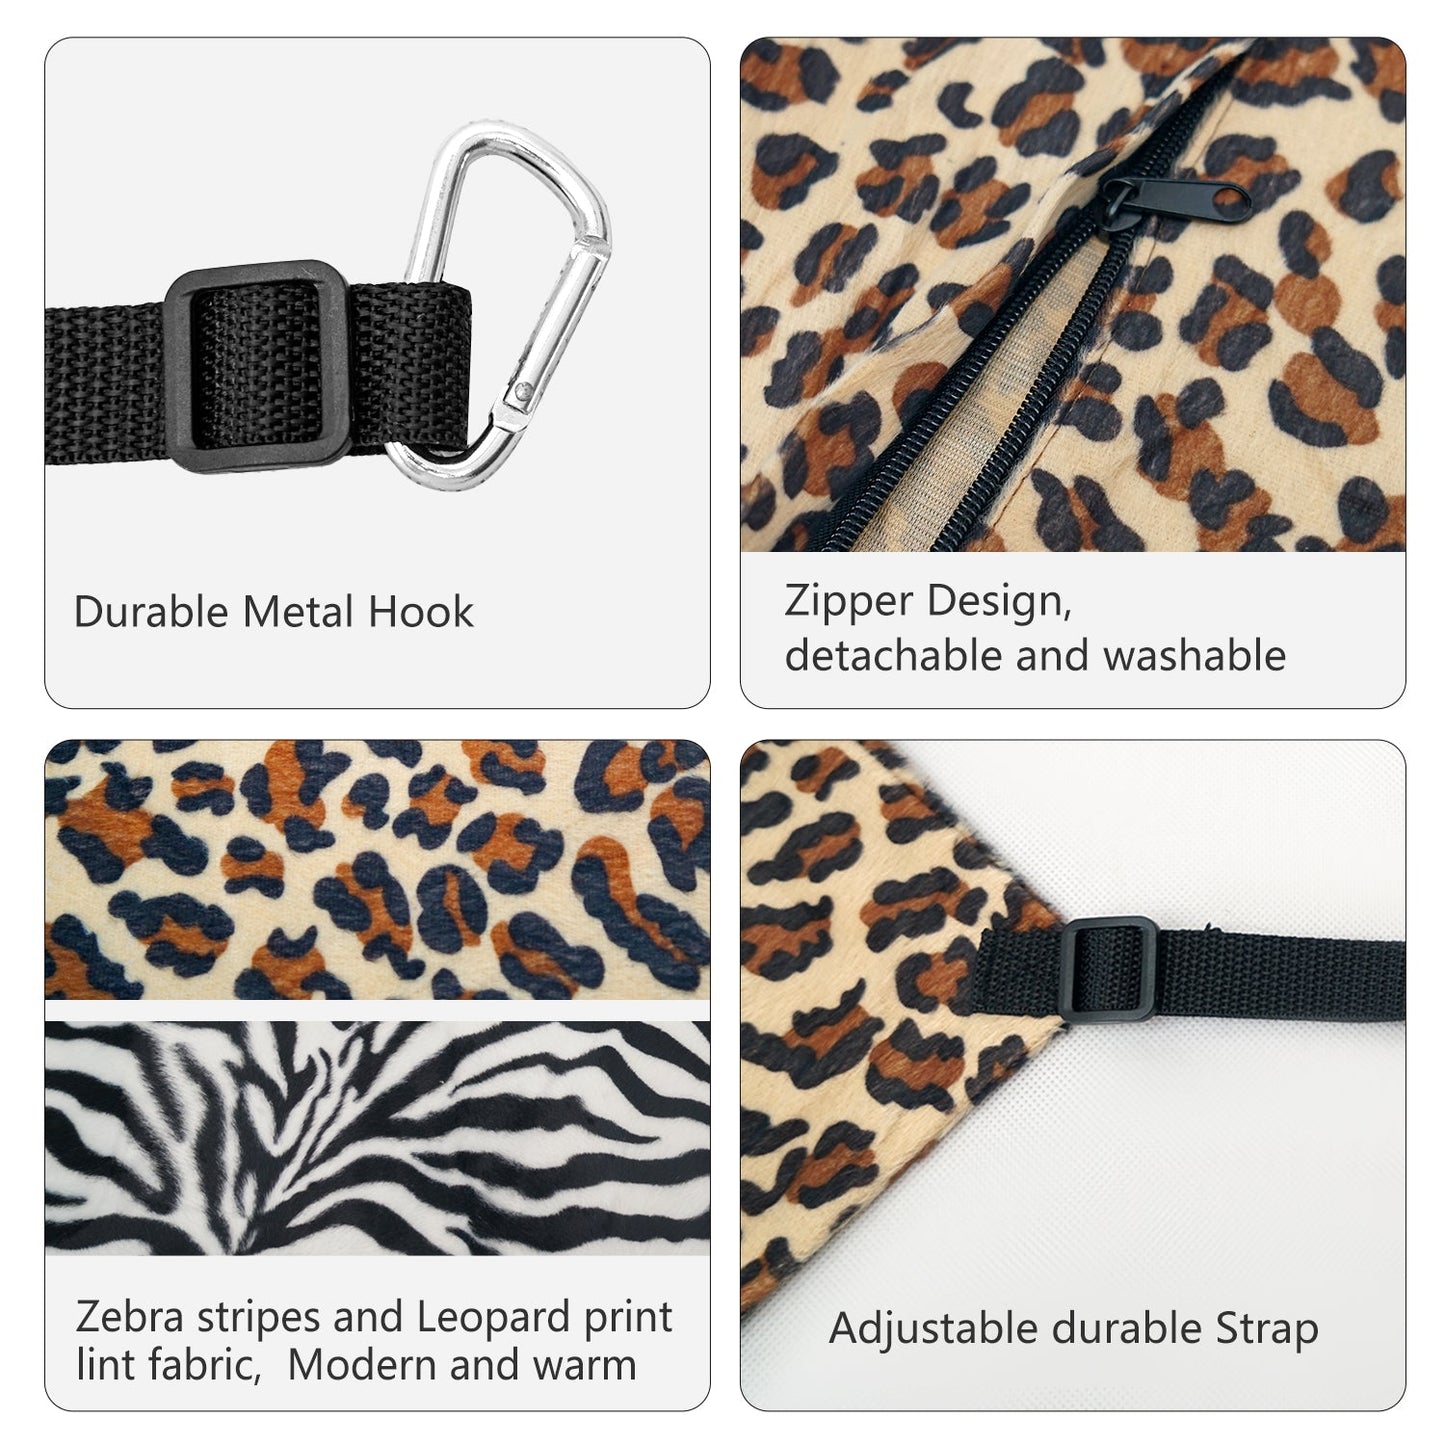 durable metal hook and zipper design